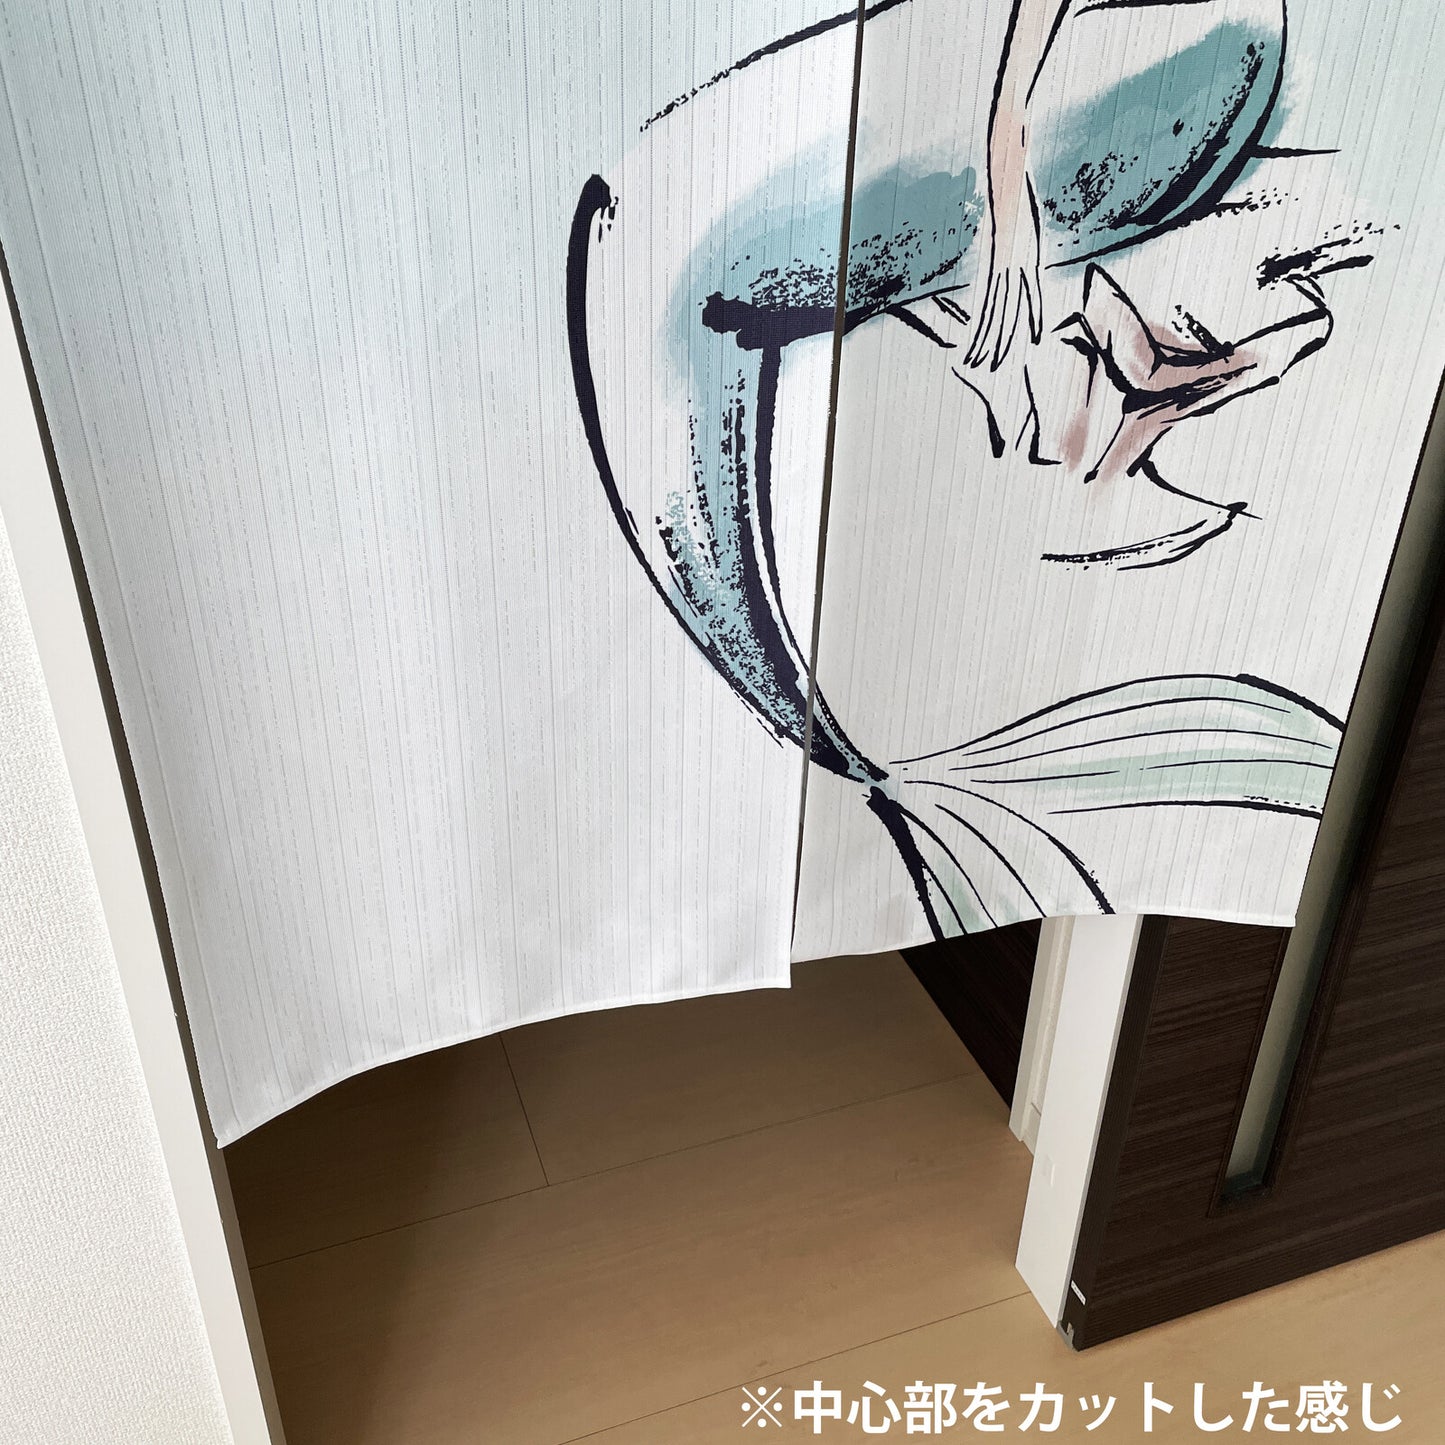  Disney Ariel door curtain made in Japan 